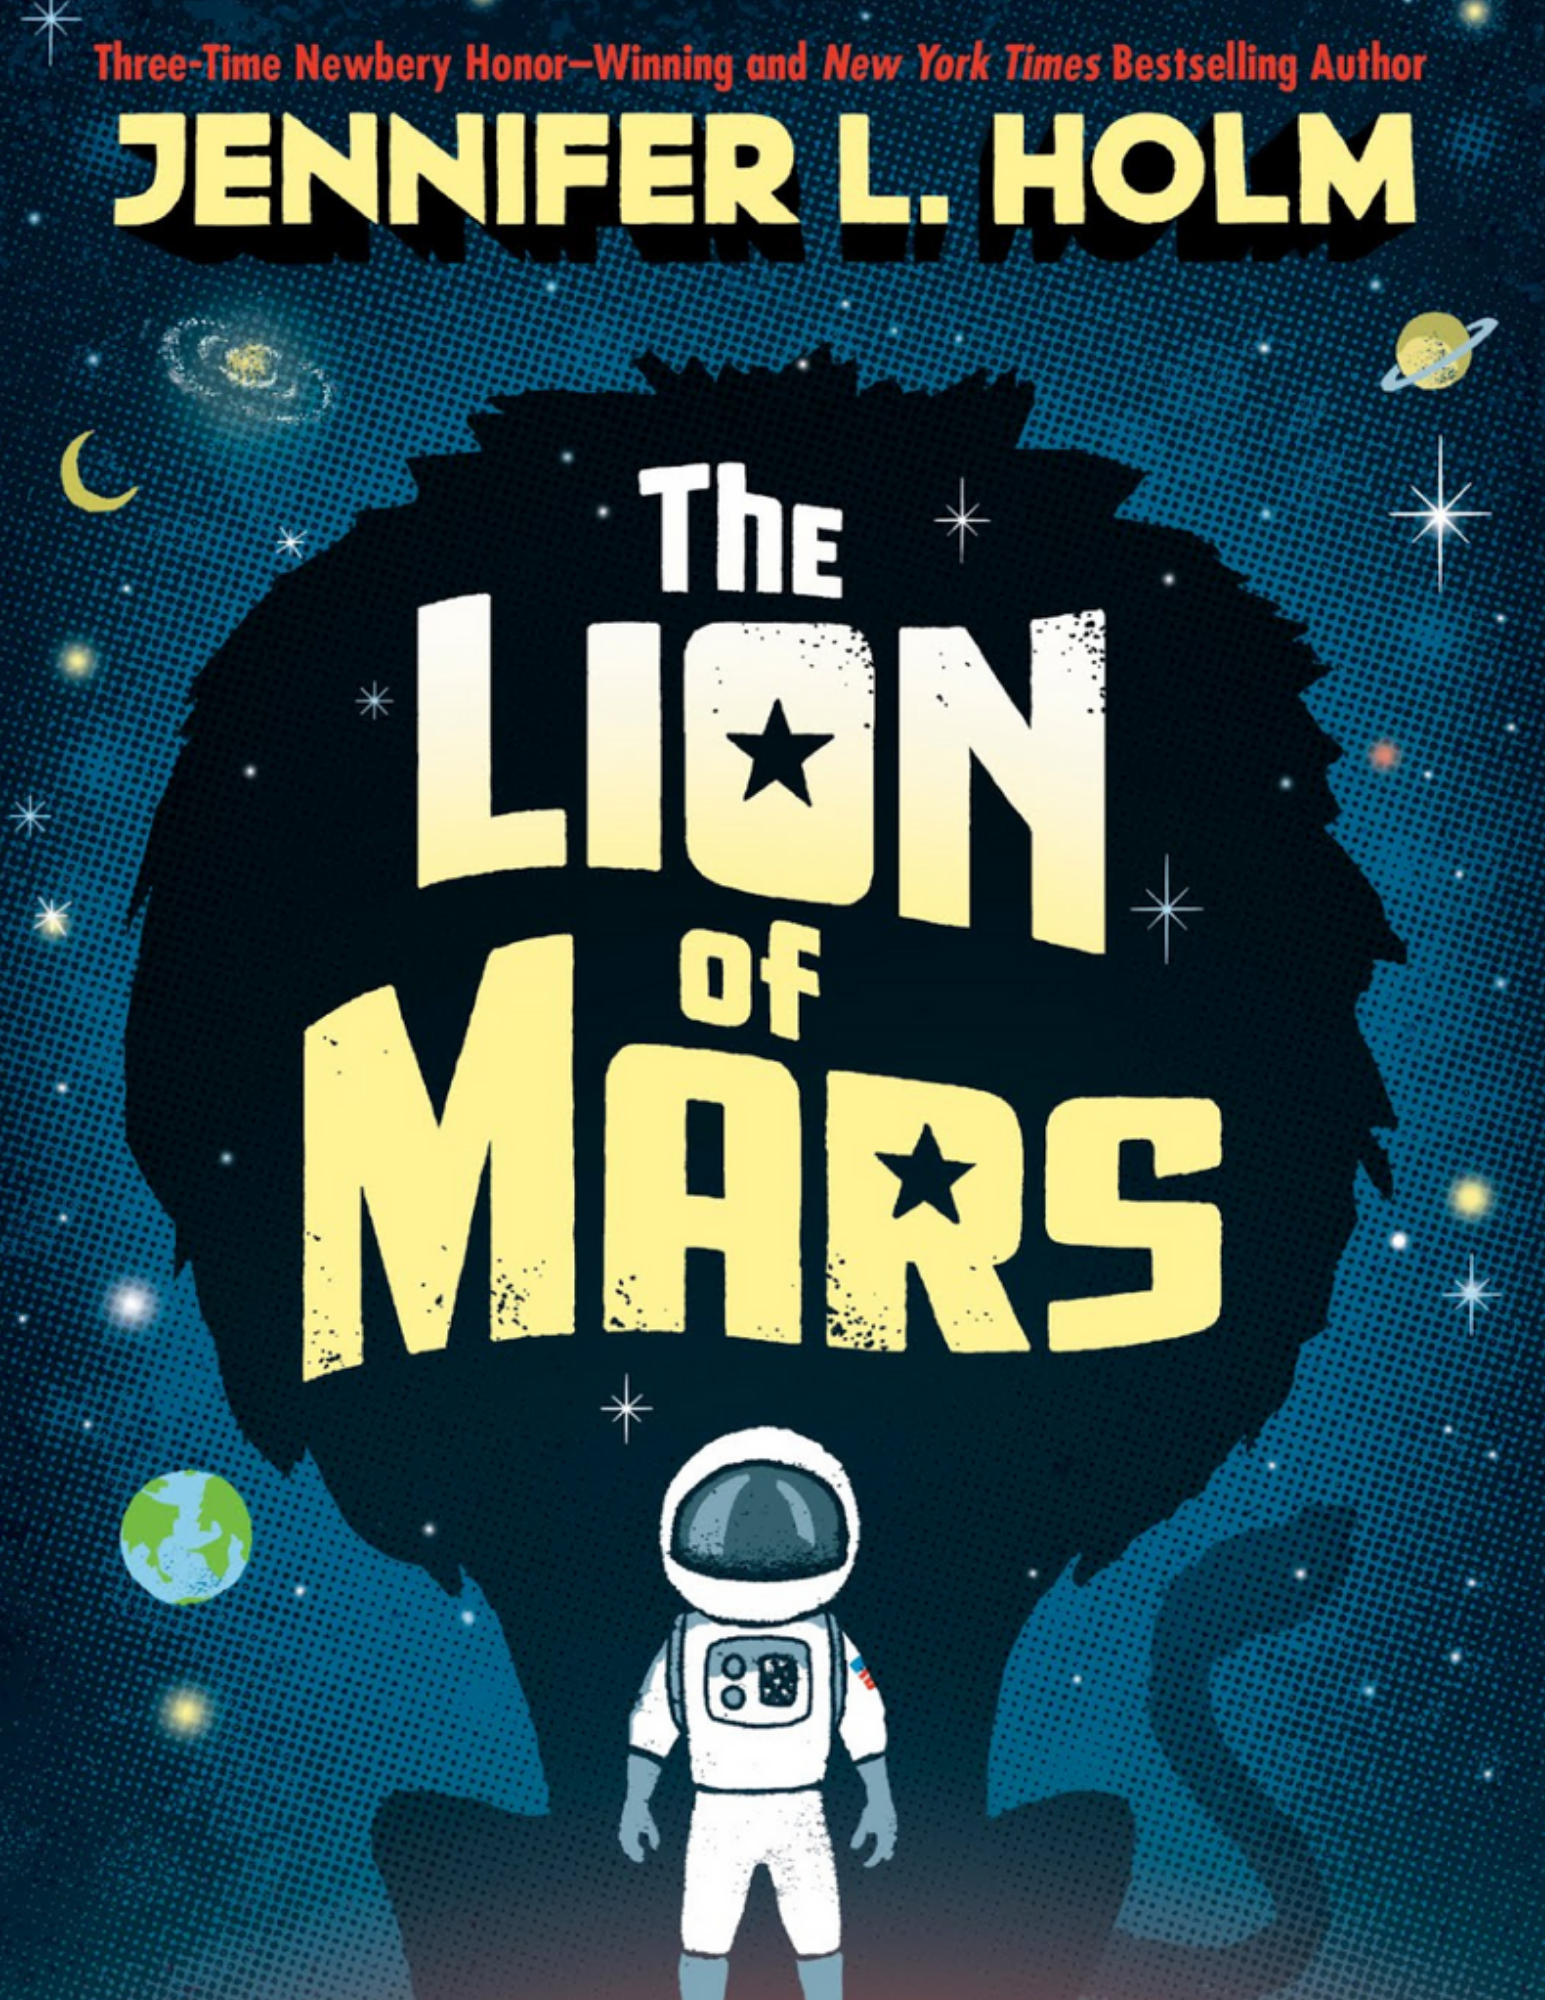 The Lion if Mars by Jennifer L. Holm